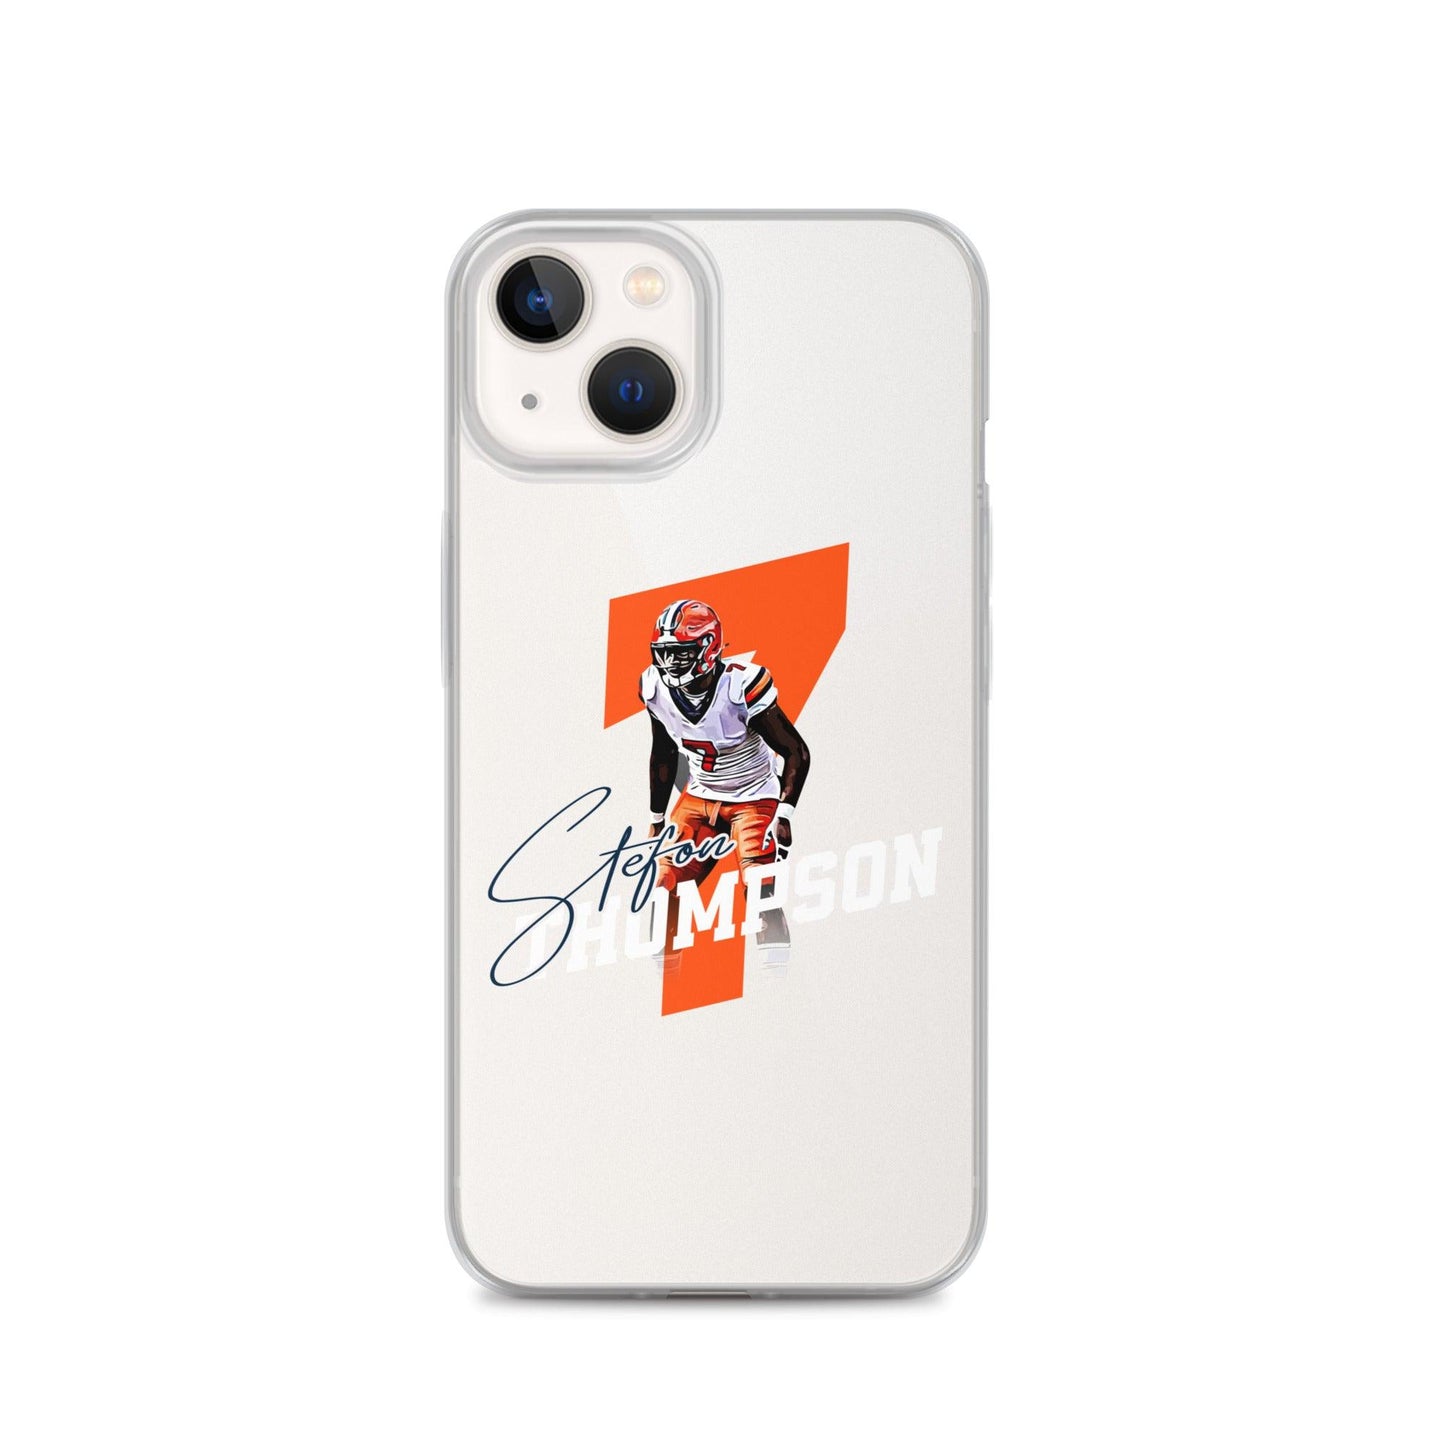 Stefon Thompson "7" iPhone Case - Fan Arch